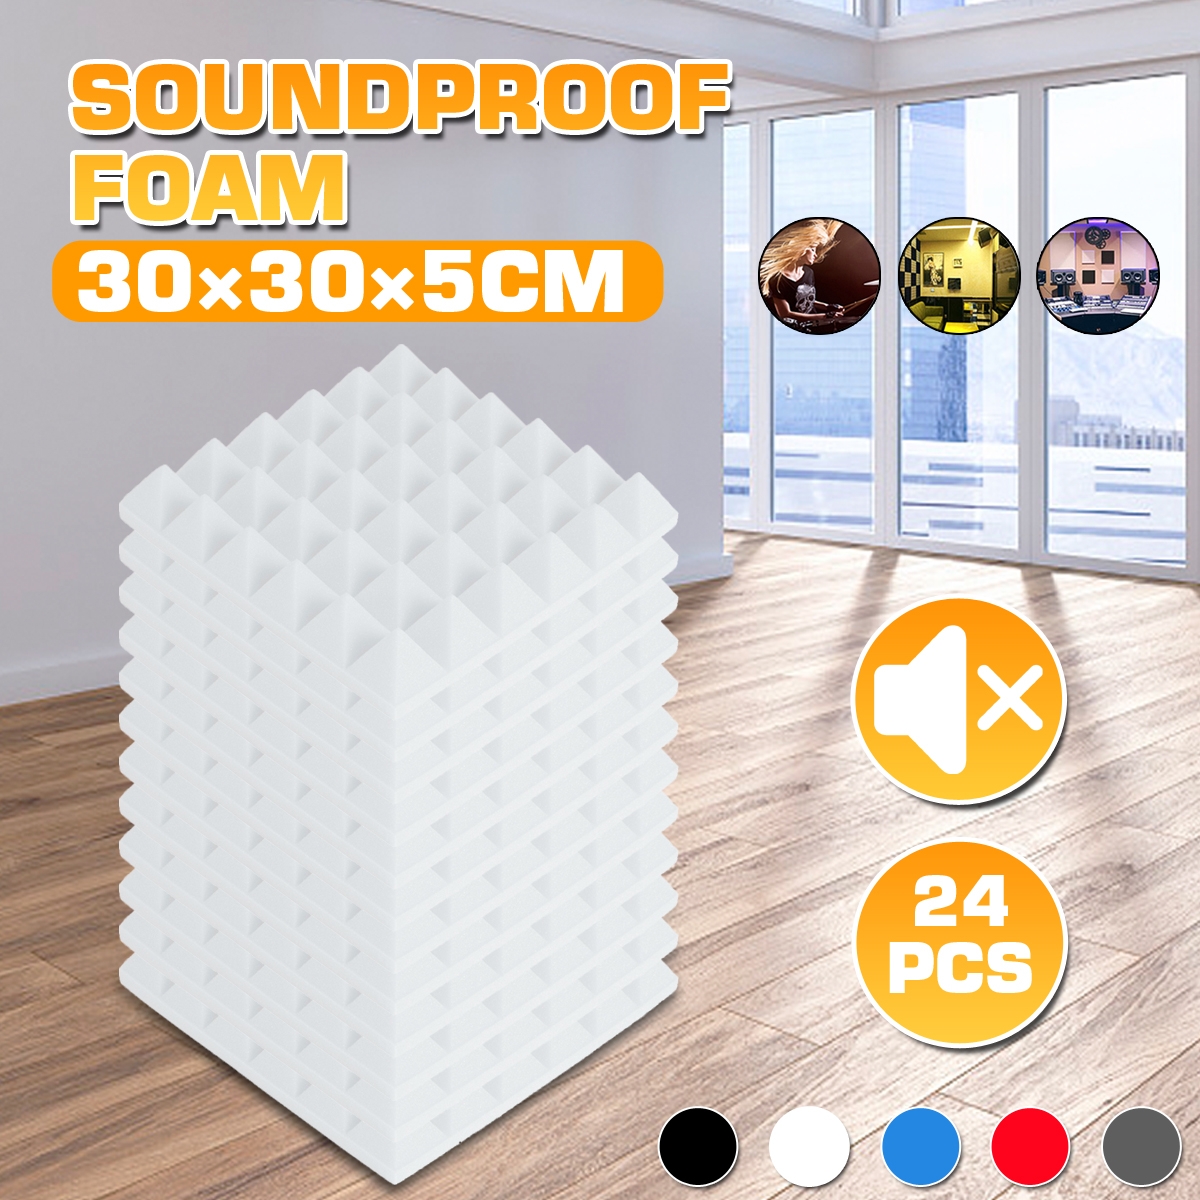 24PCS 300x300x50mm Soundproofing Foam Studio Acoustic Foam Soundproof ...